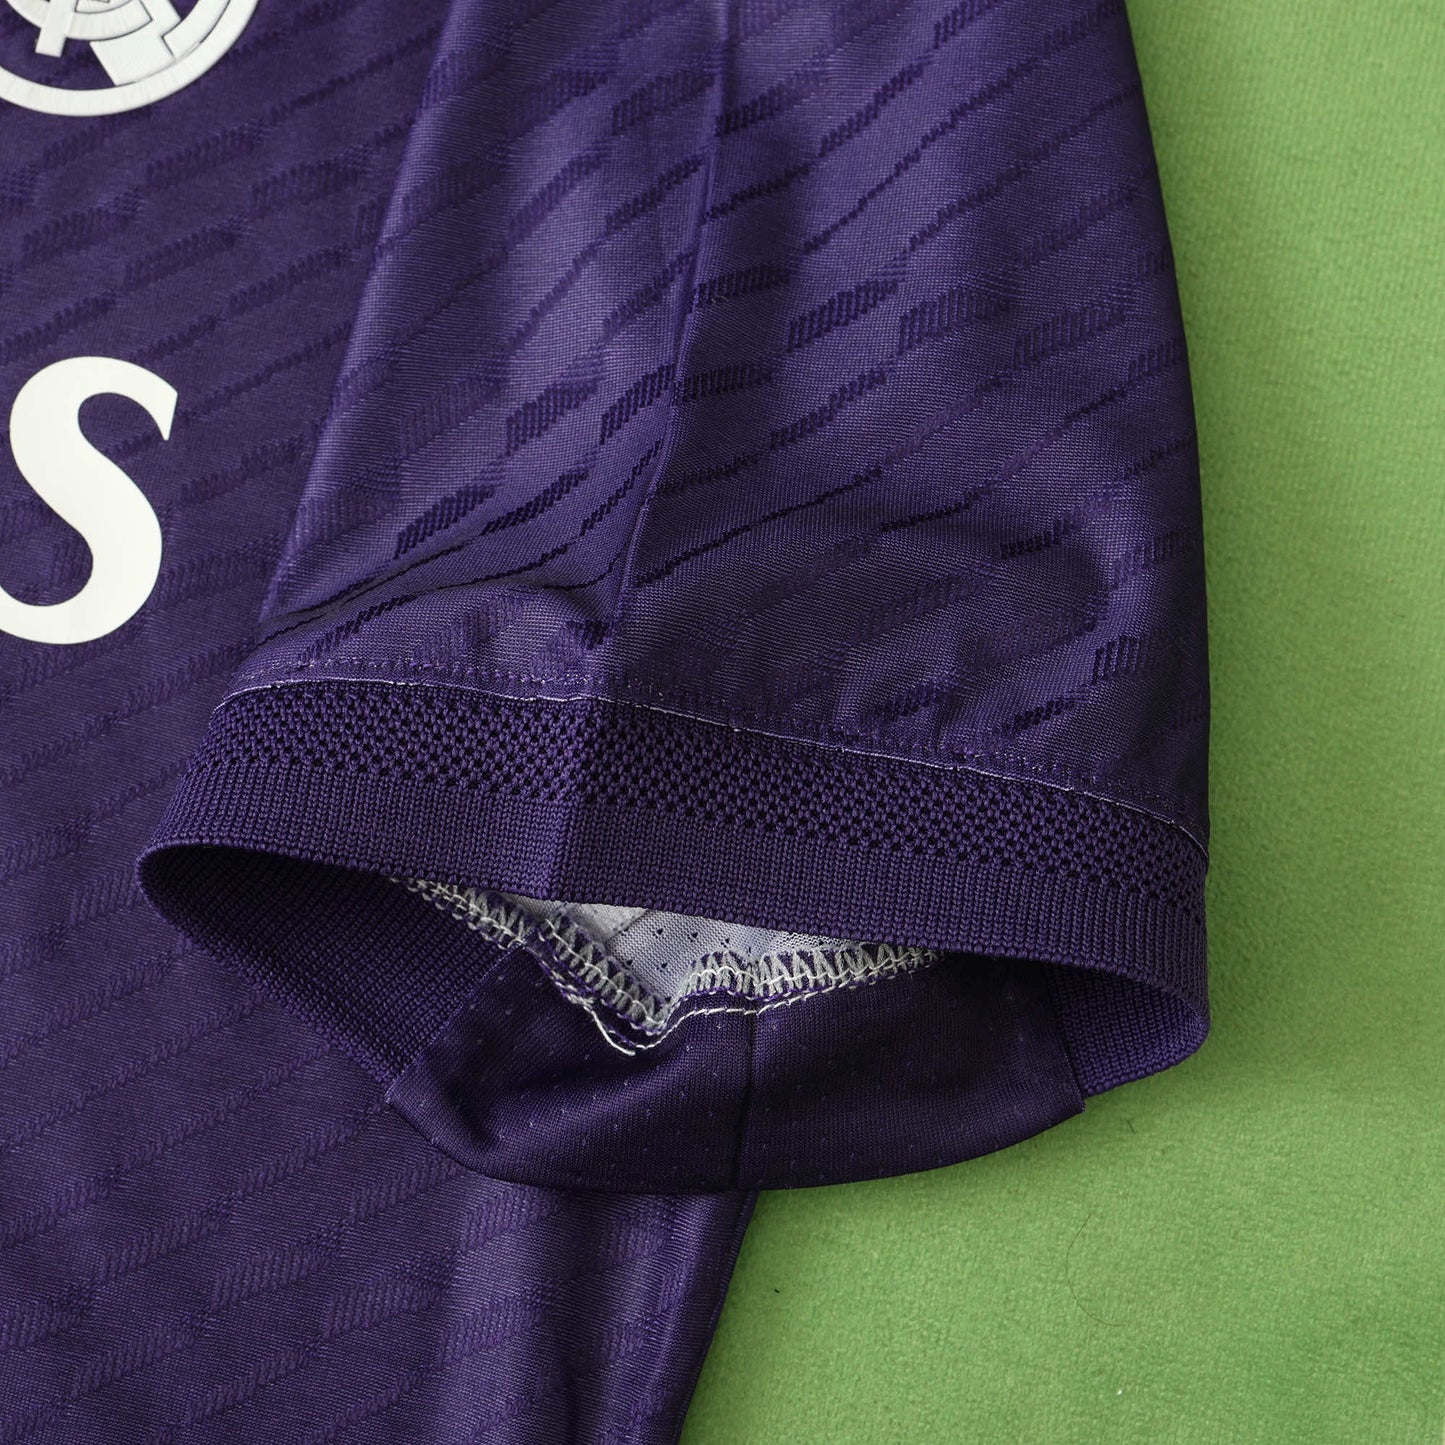 Real Madrid 24 25 season purple jersey